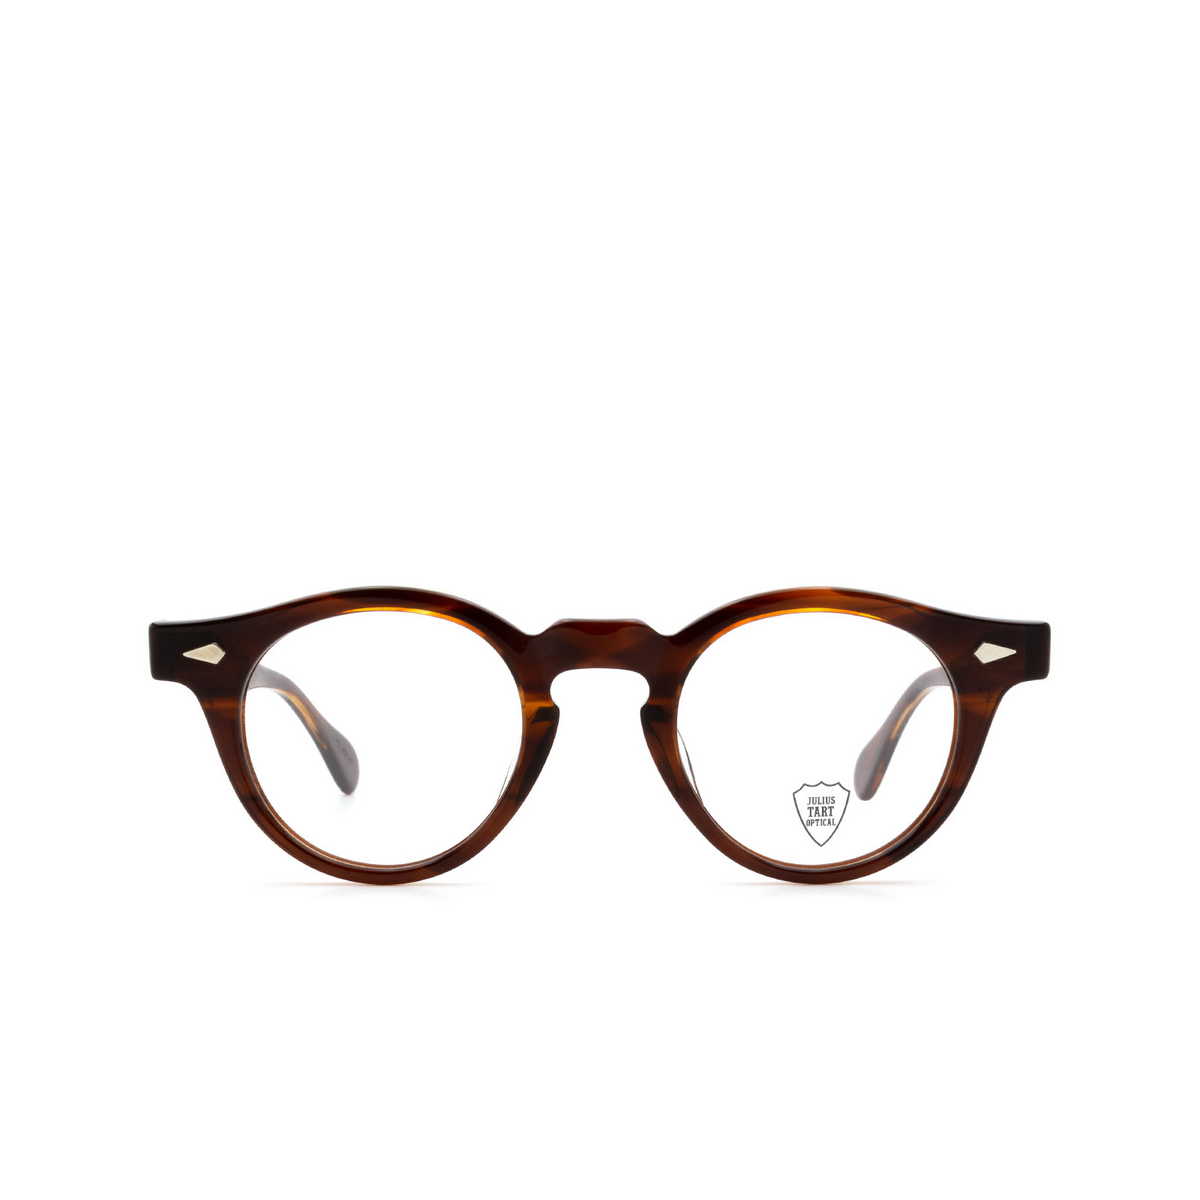 Julius Tart Optical® Round Eyeglasses: Harold color Demi-amber - front view.